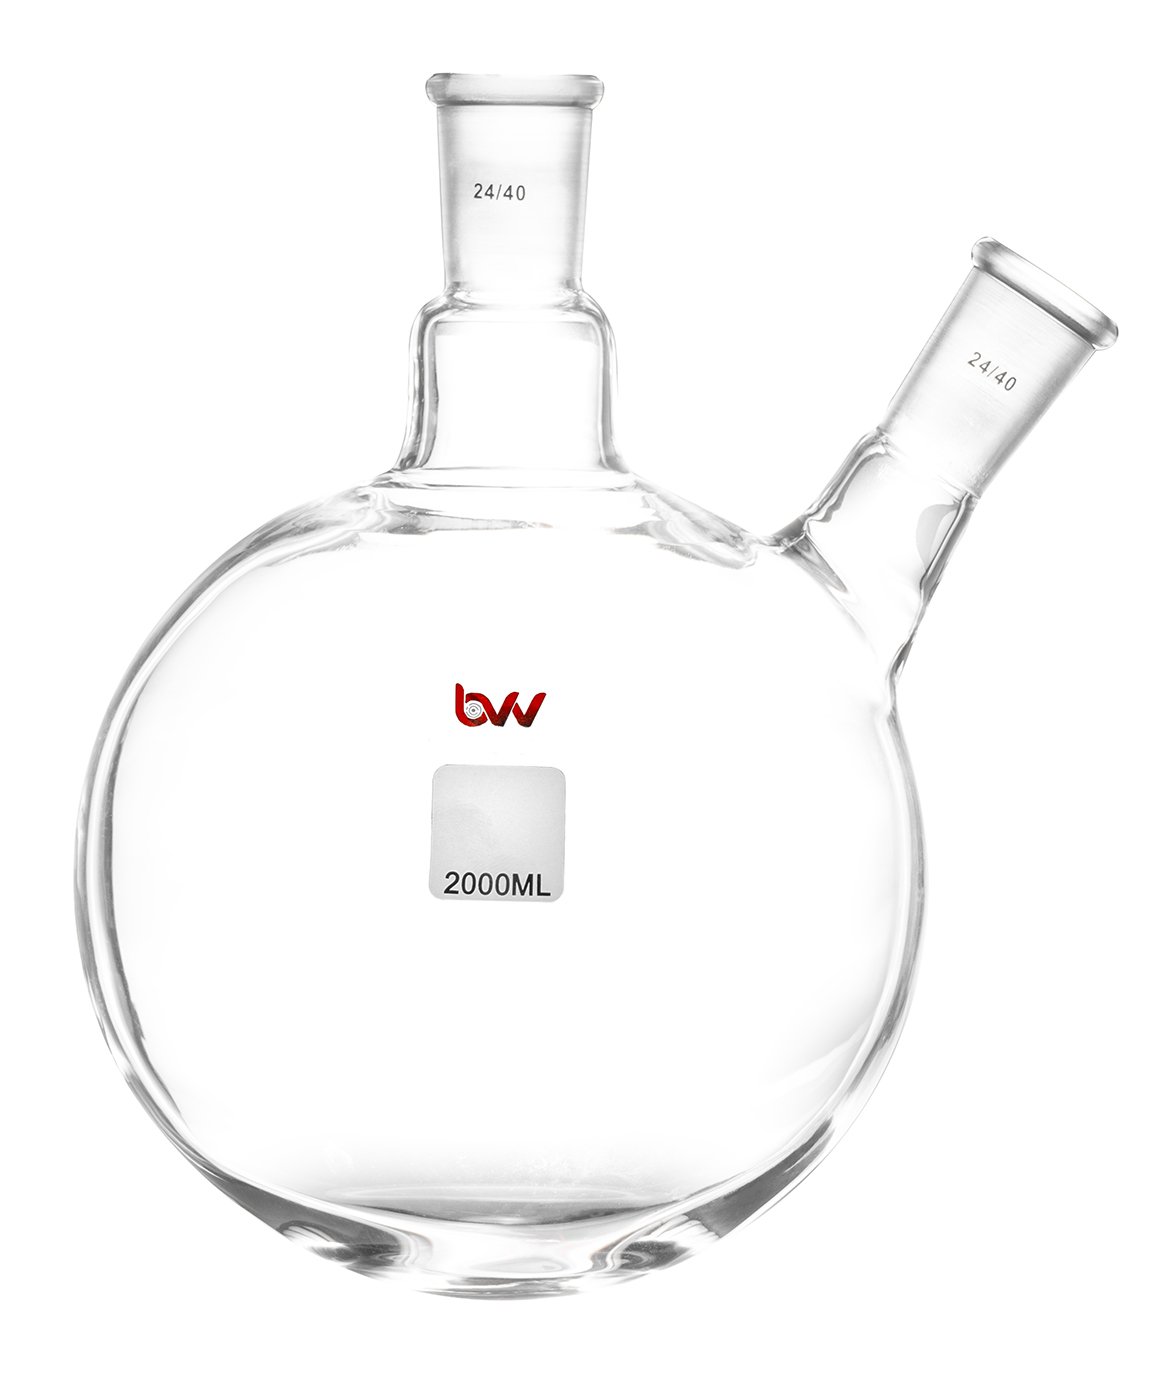 Double Neck Round Bottom Flask Shop All Categories BVV 500ml